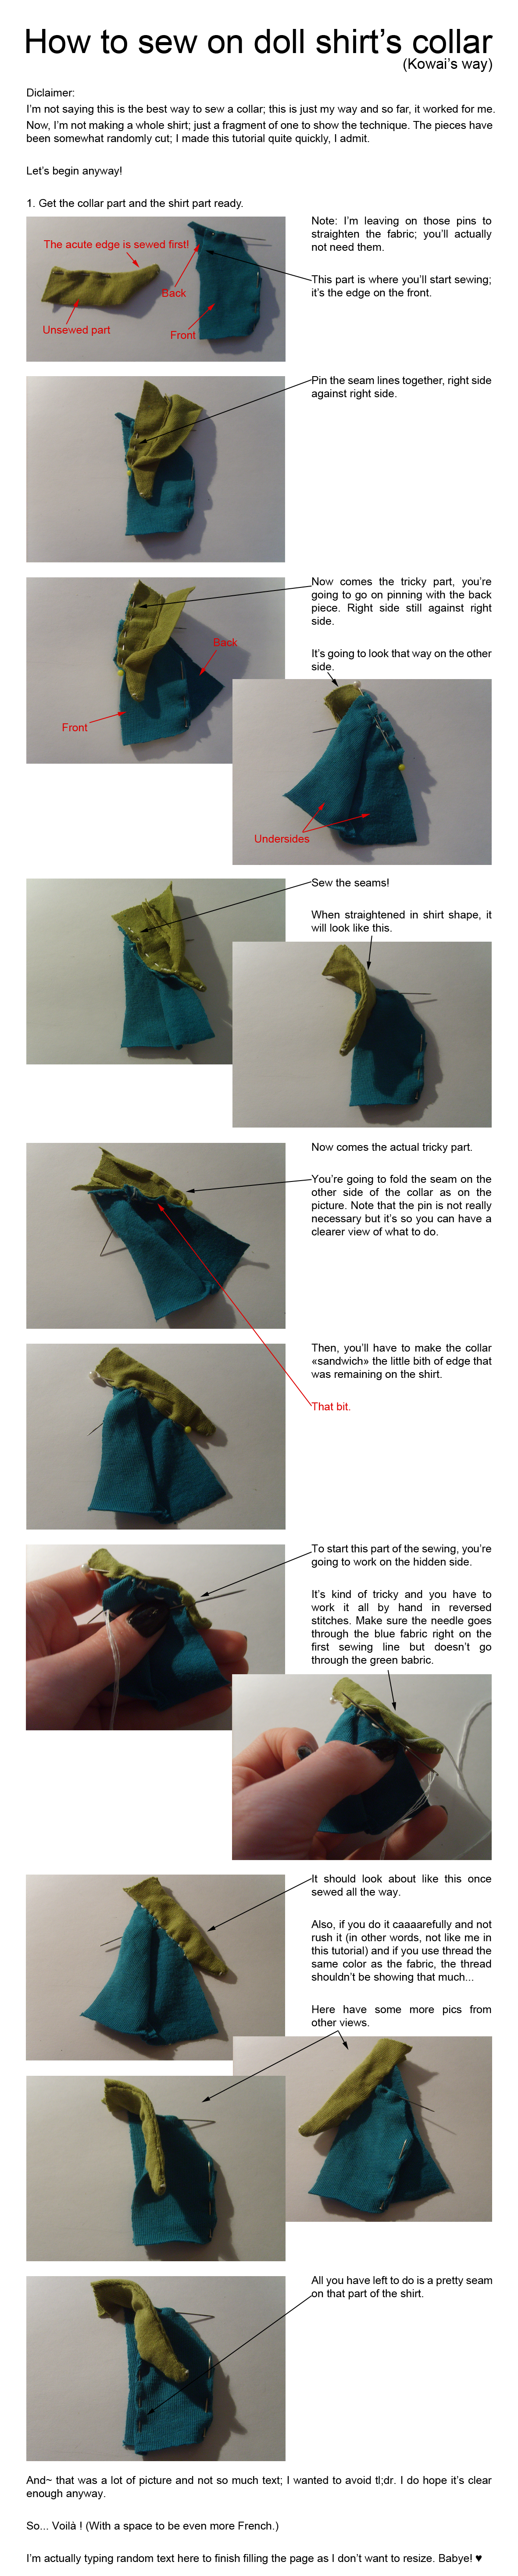 Collar sewing tutorial